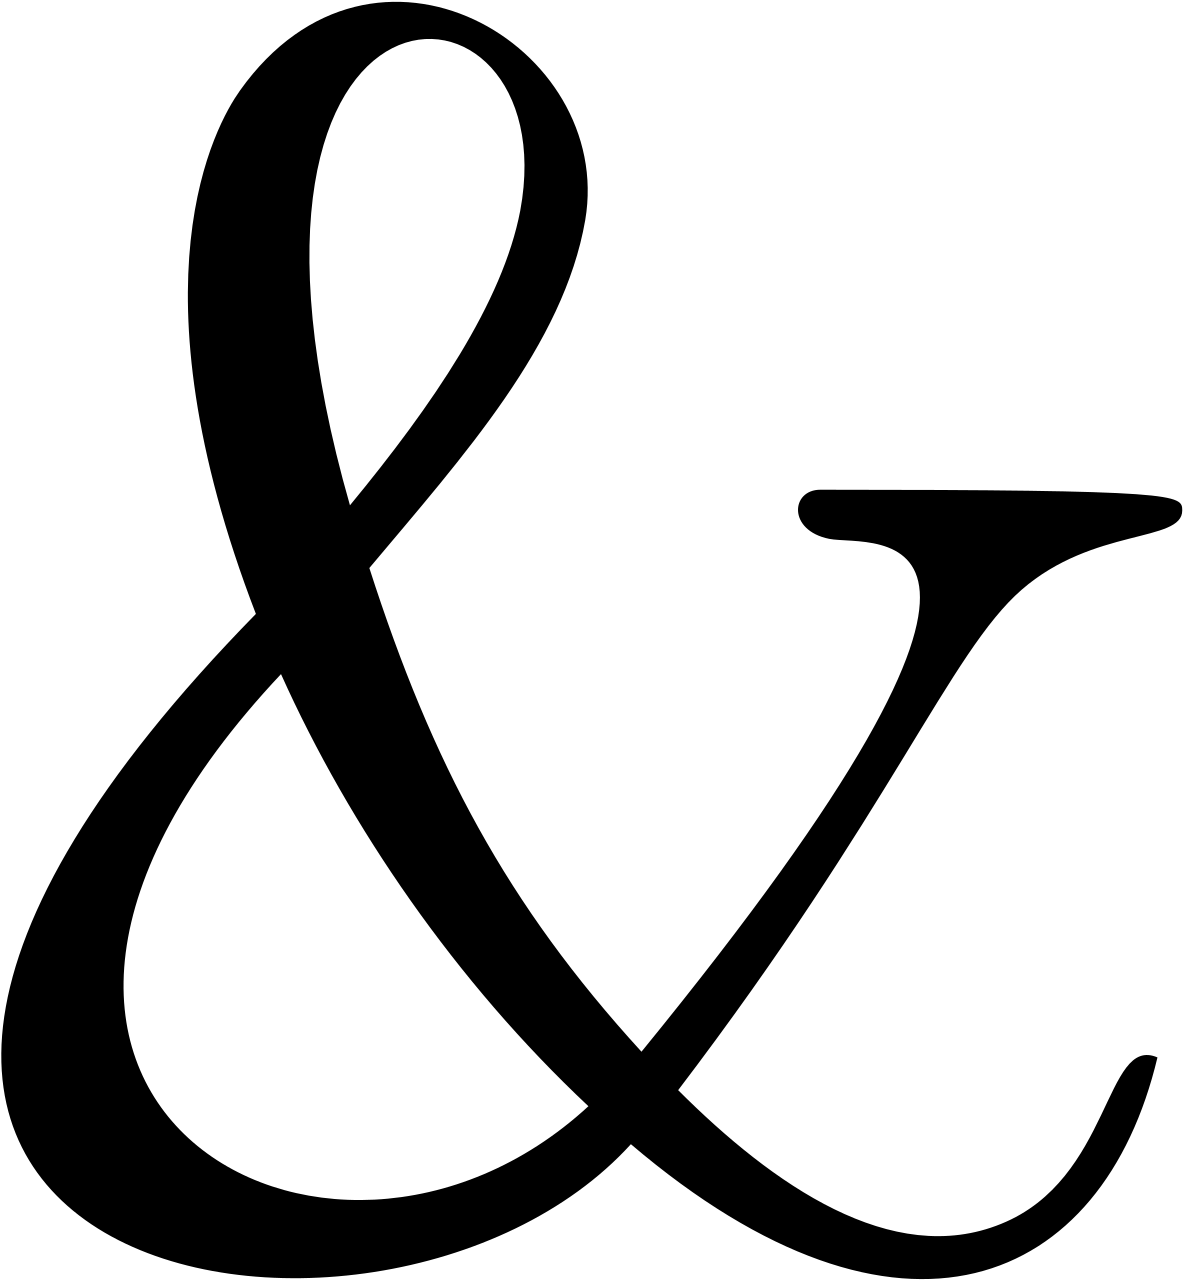 Ampersand Image No Background (2000x2136)